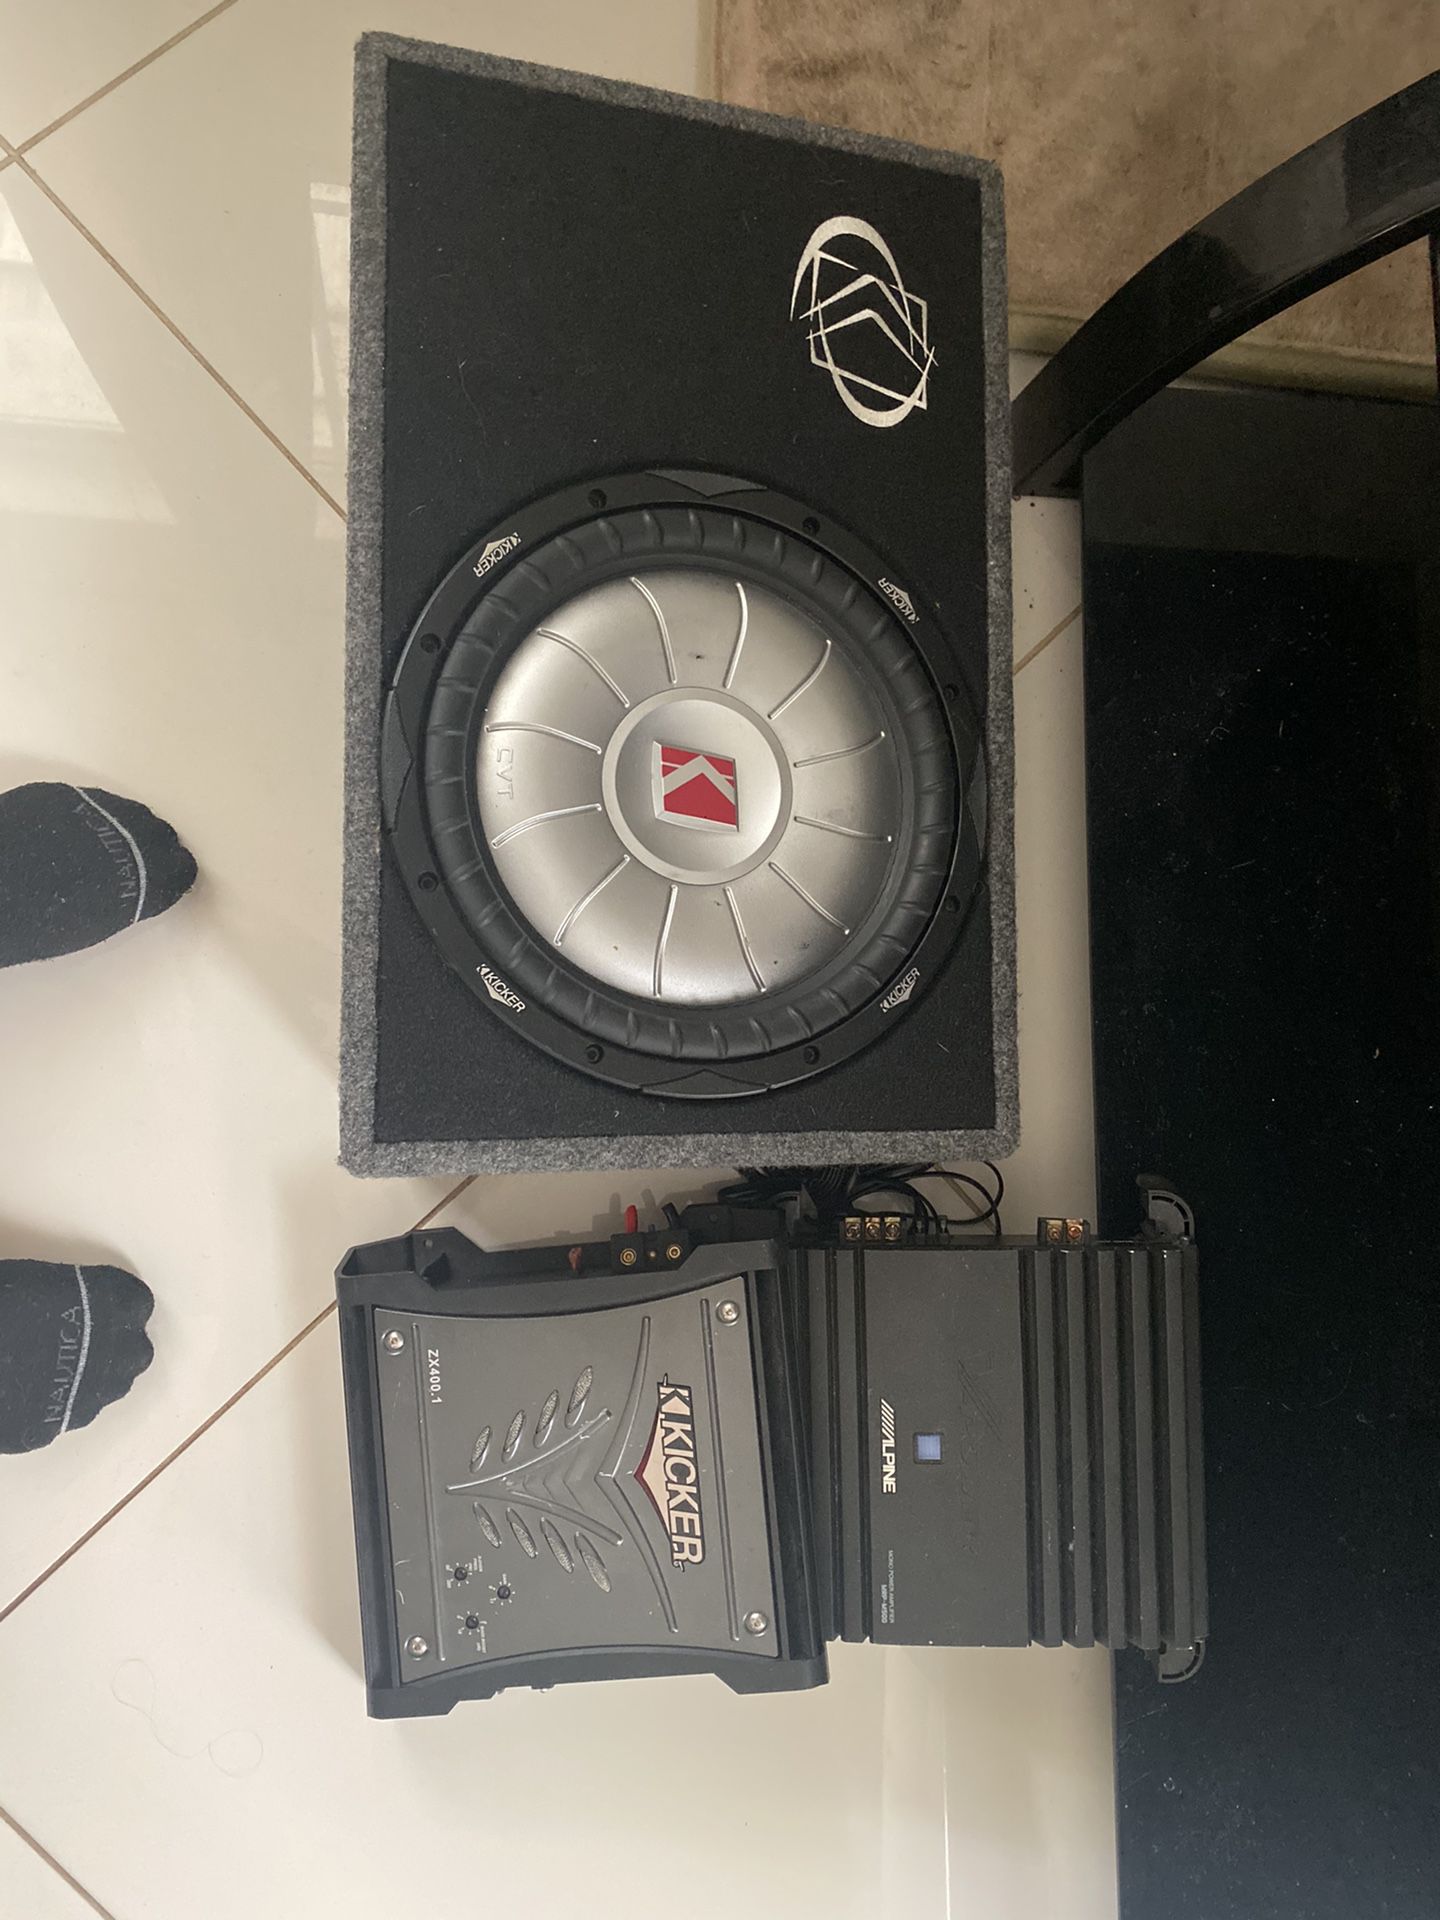 Kicker 12” speaker and kicker amp